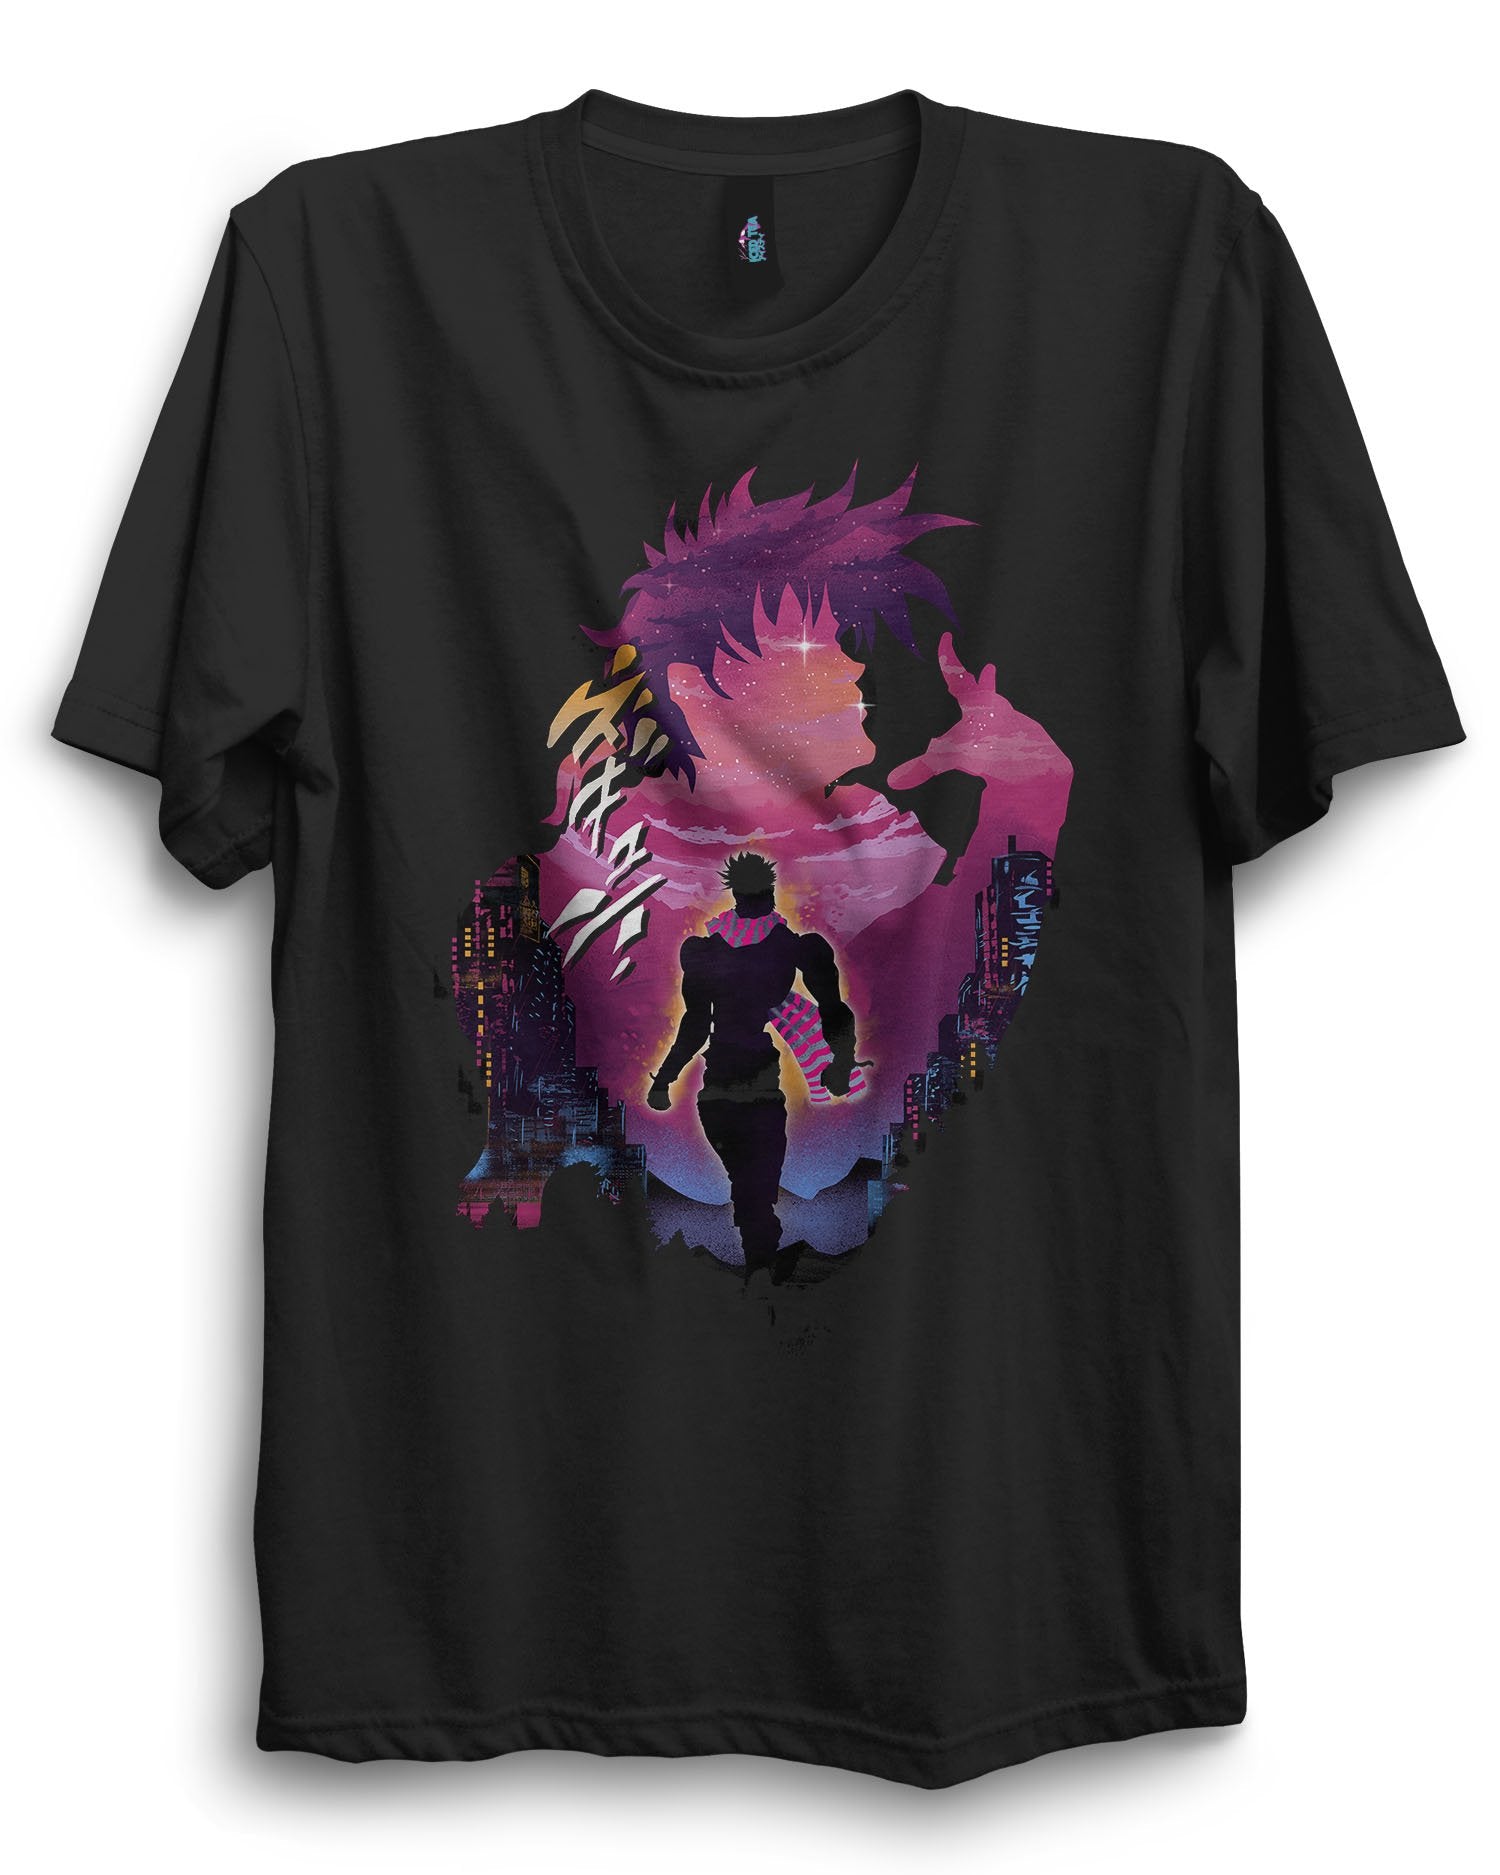 Joestar - Jojo Anime T-Shirt - Dark Aesthetics and Anime Clothing Streetwear